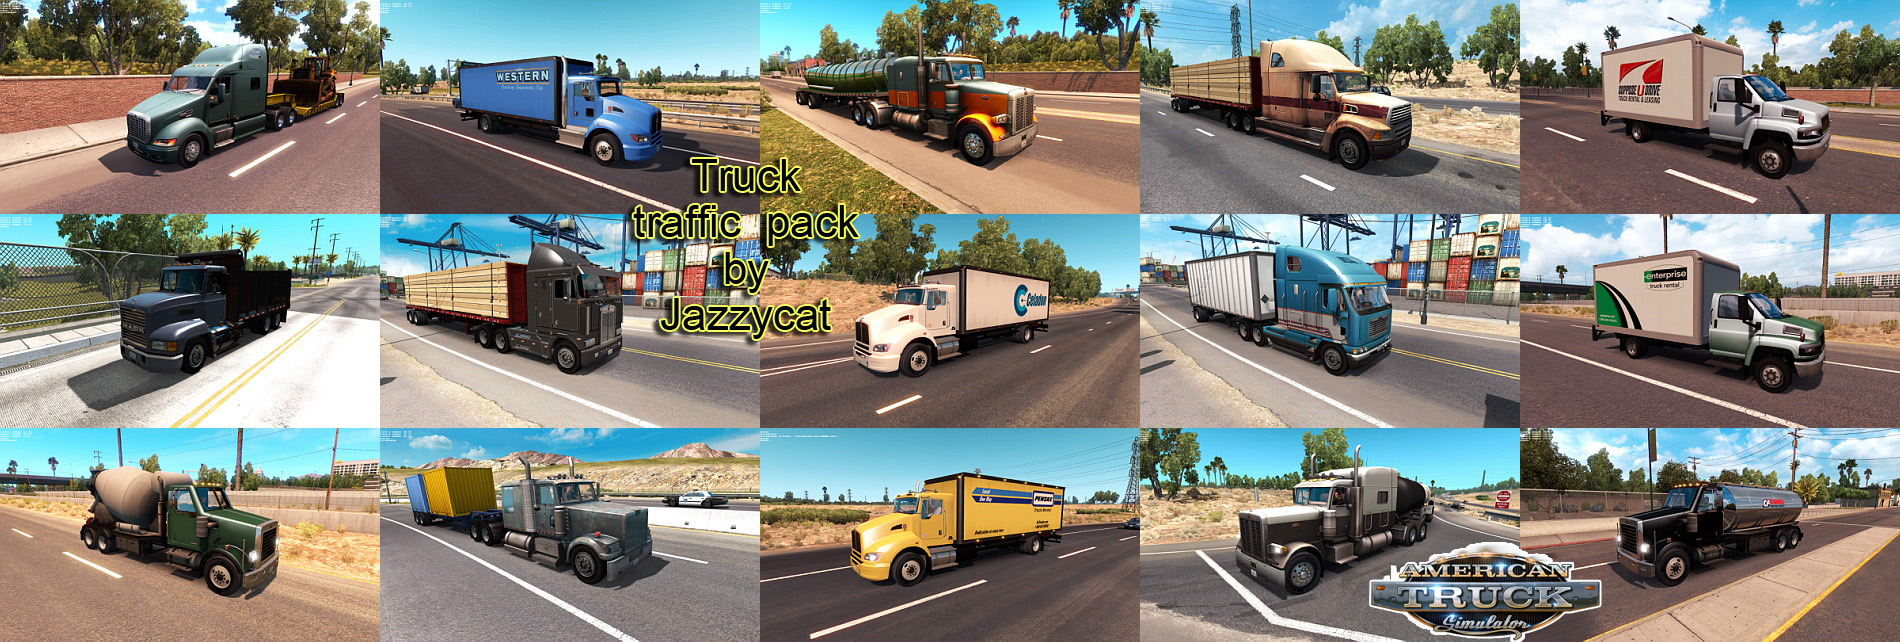 01_truck_traffic_pack_by_Jazzycat_v1.2.jpg